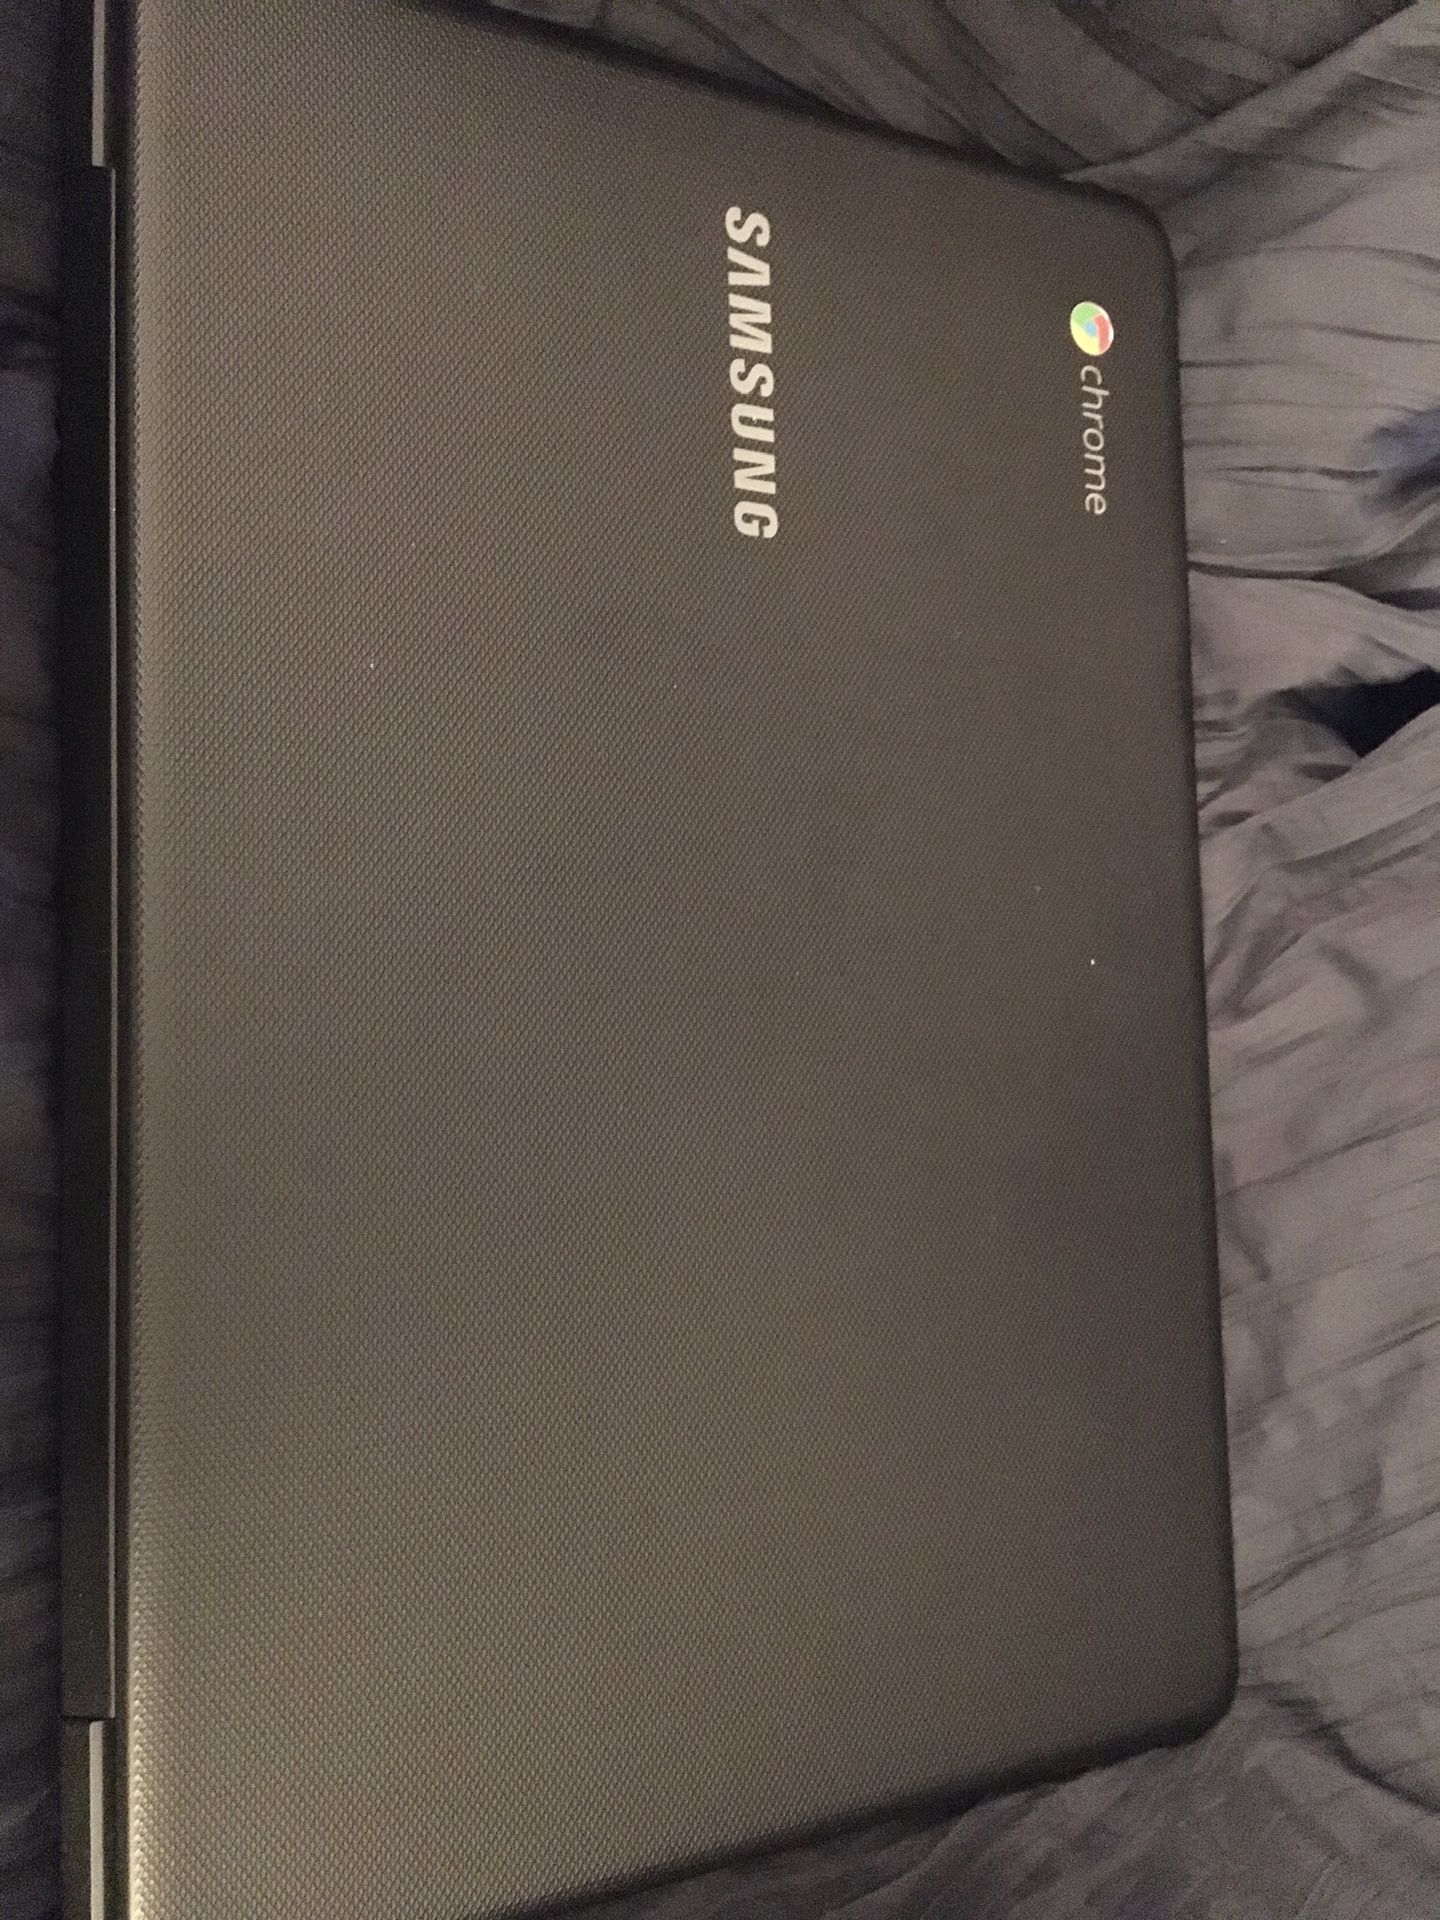 Samsung chromebook 3